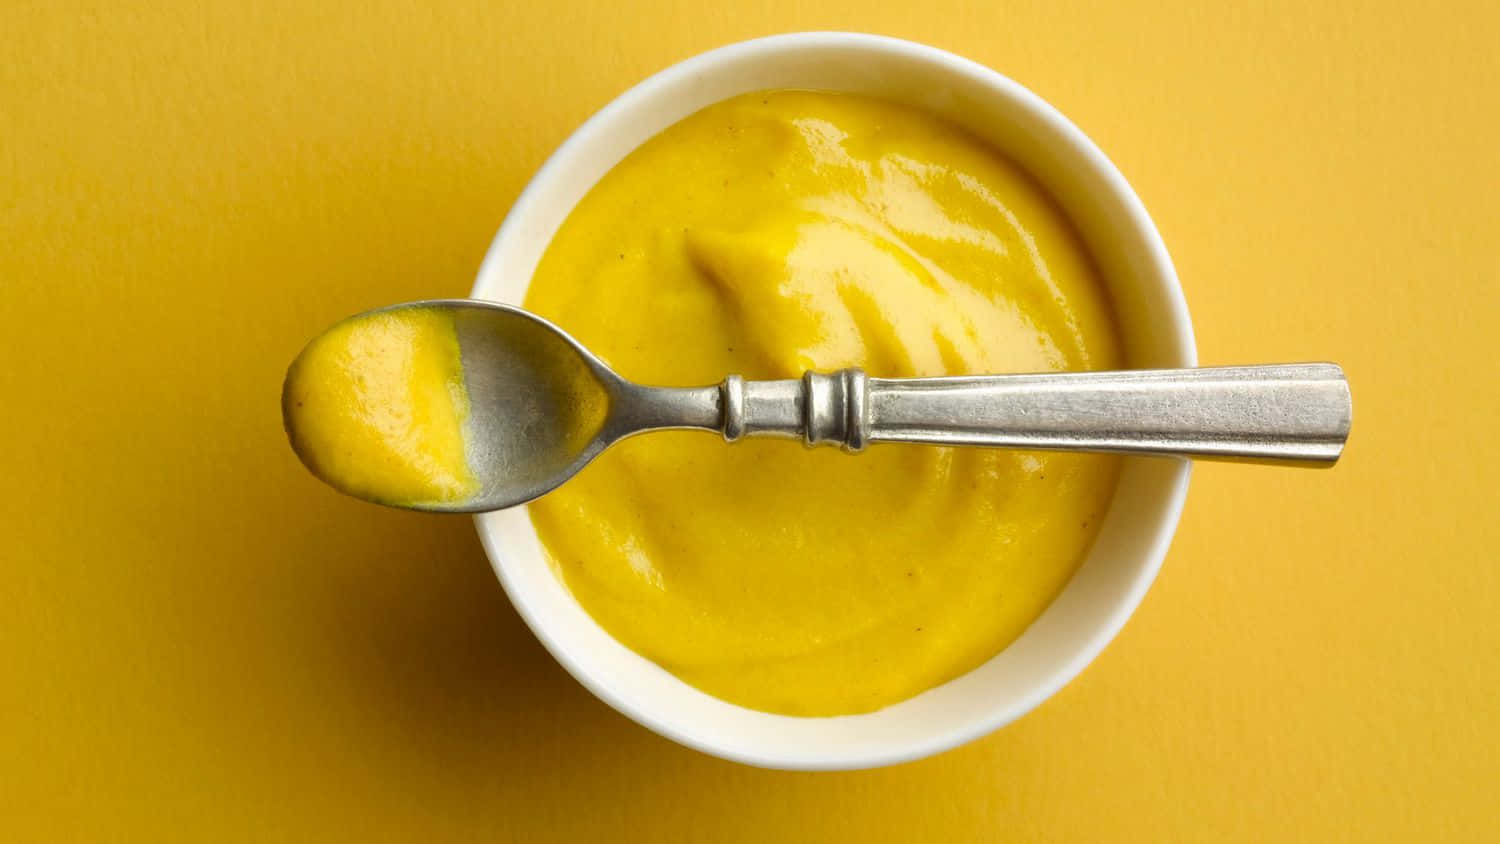 Bowlof Mustardwith Spoon.jpg Wallpaper